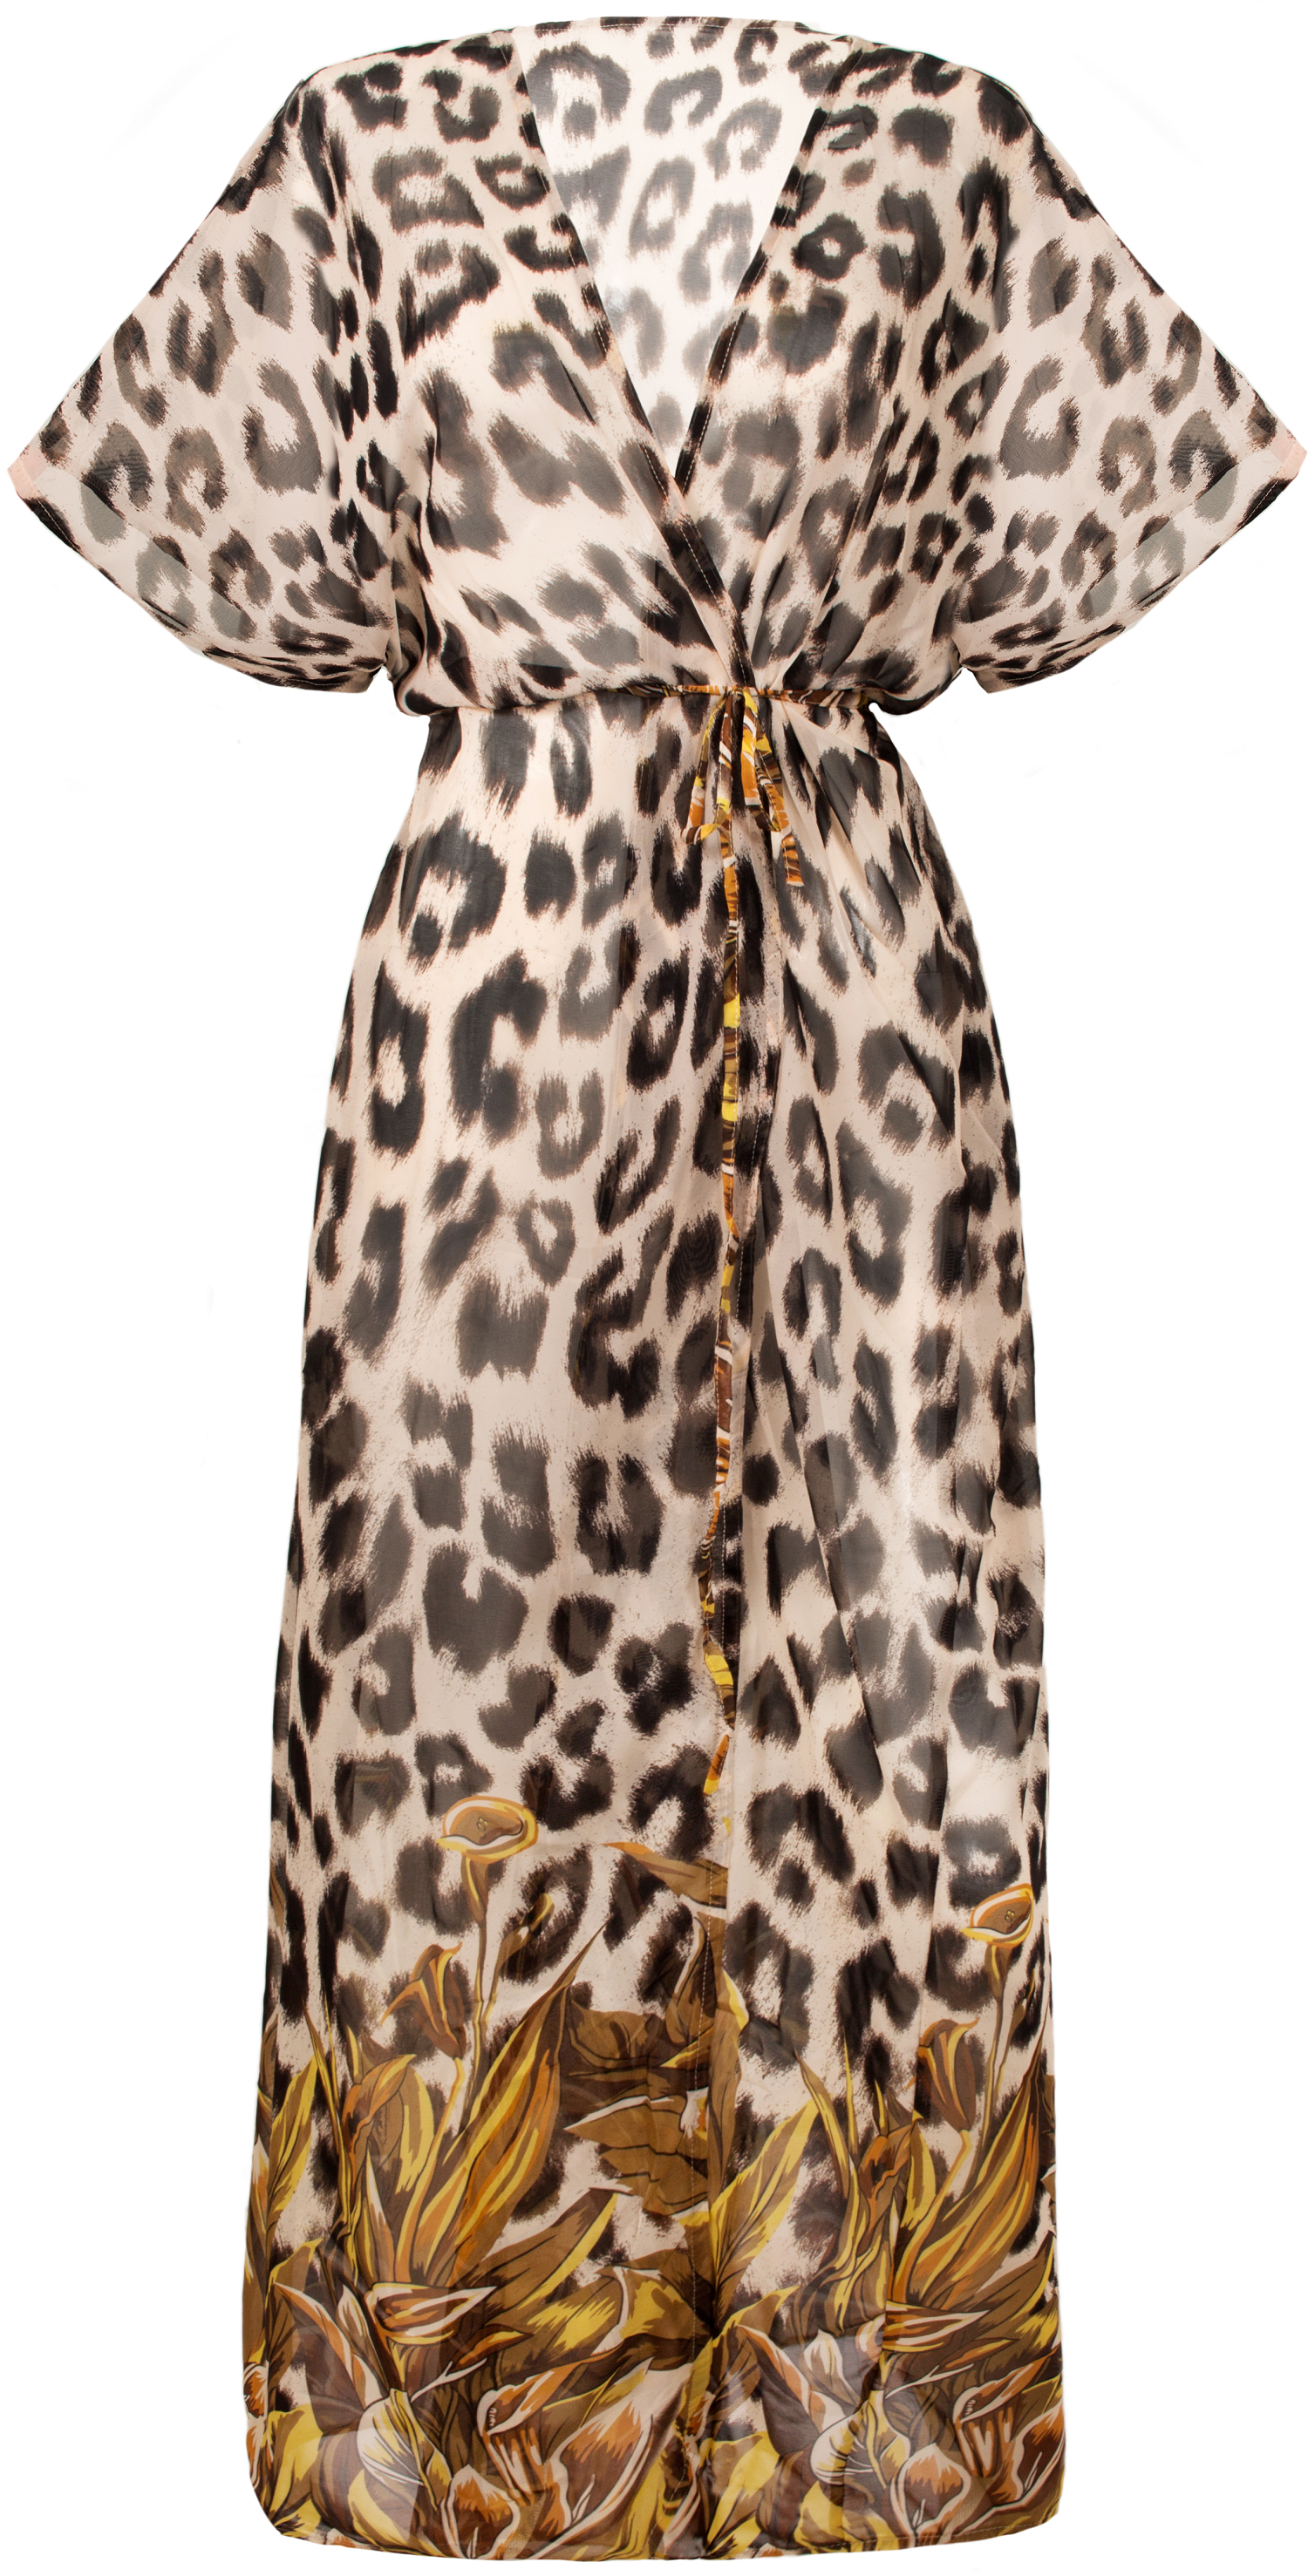 Stunning Leopard Print Kimono Beach Cover for Women – Cotton